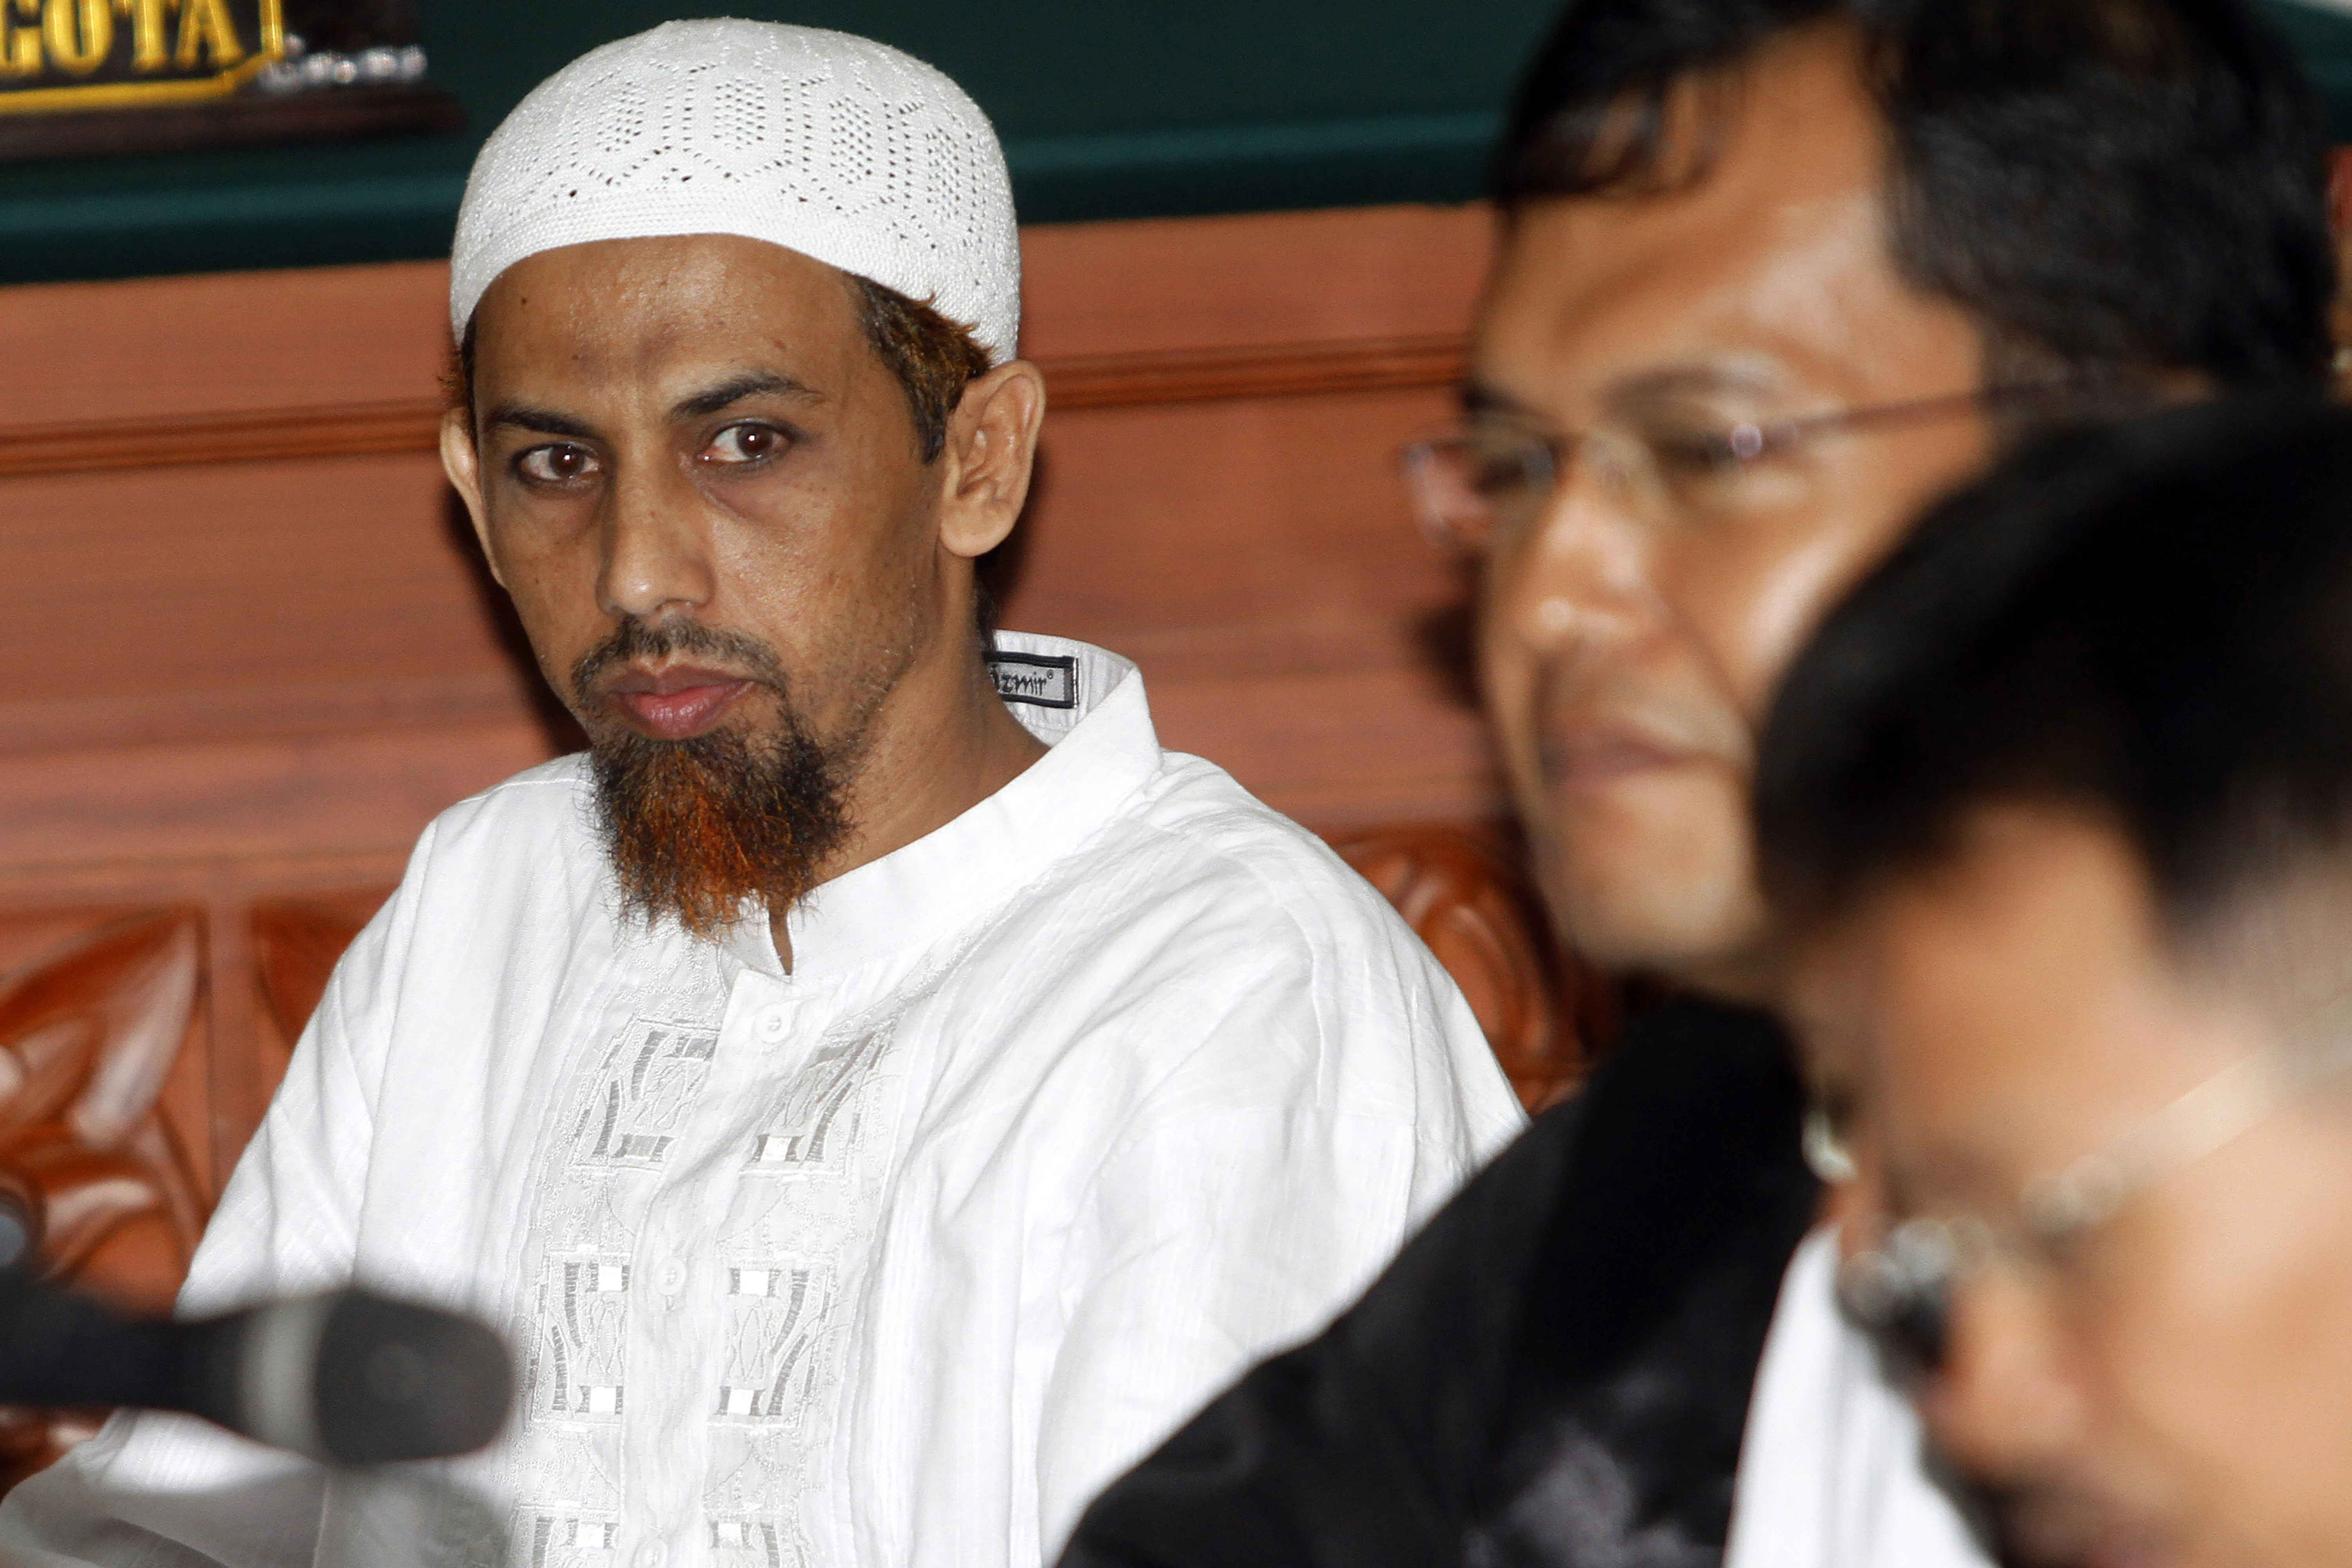 Bali bomb maker Umar Patek released from prison